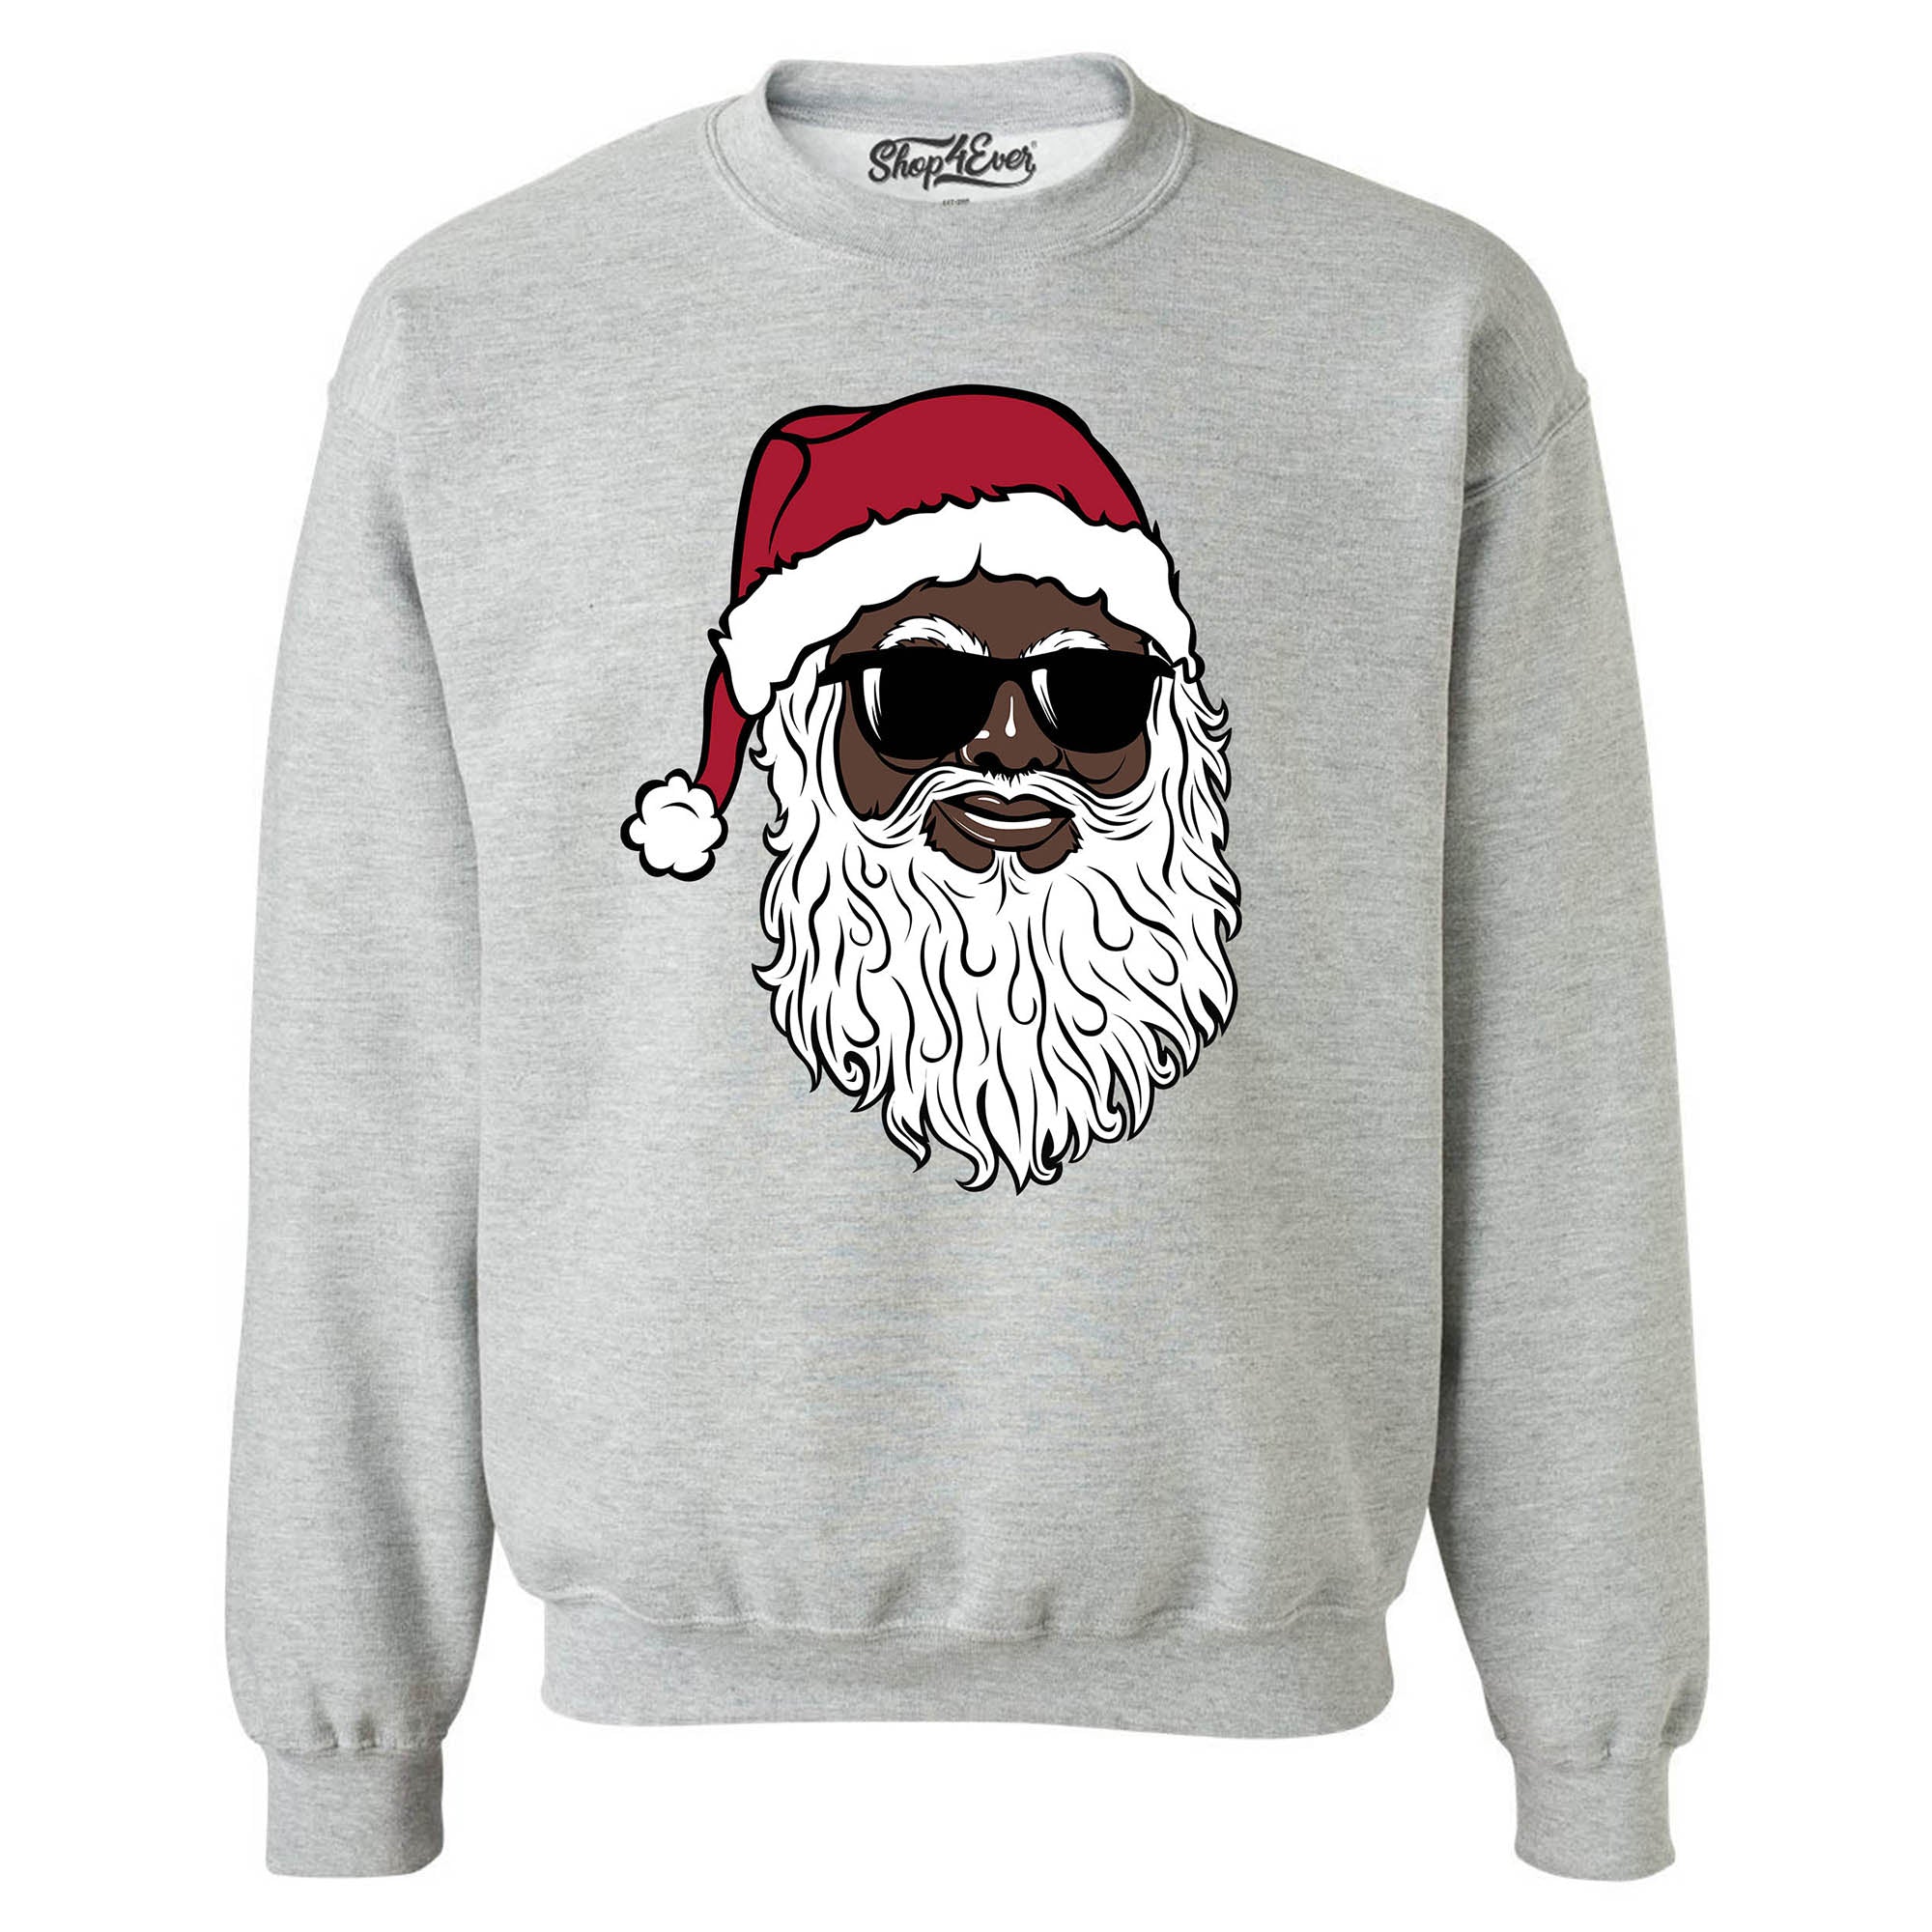 Santa Claus wearing Sunglasses Christmas Xmas Crewneck Sweatshirts